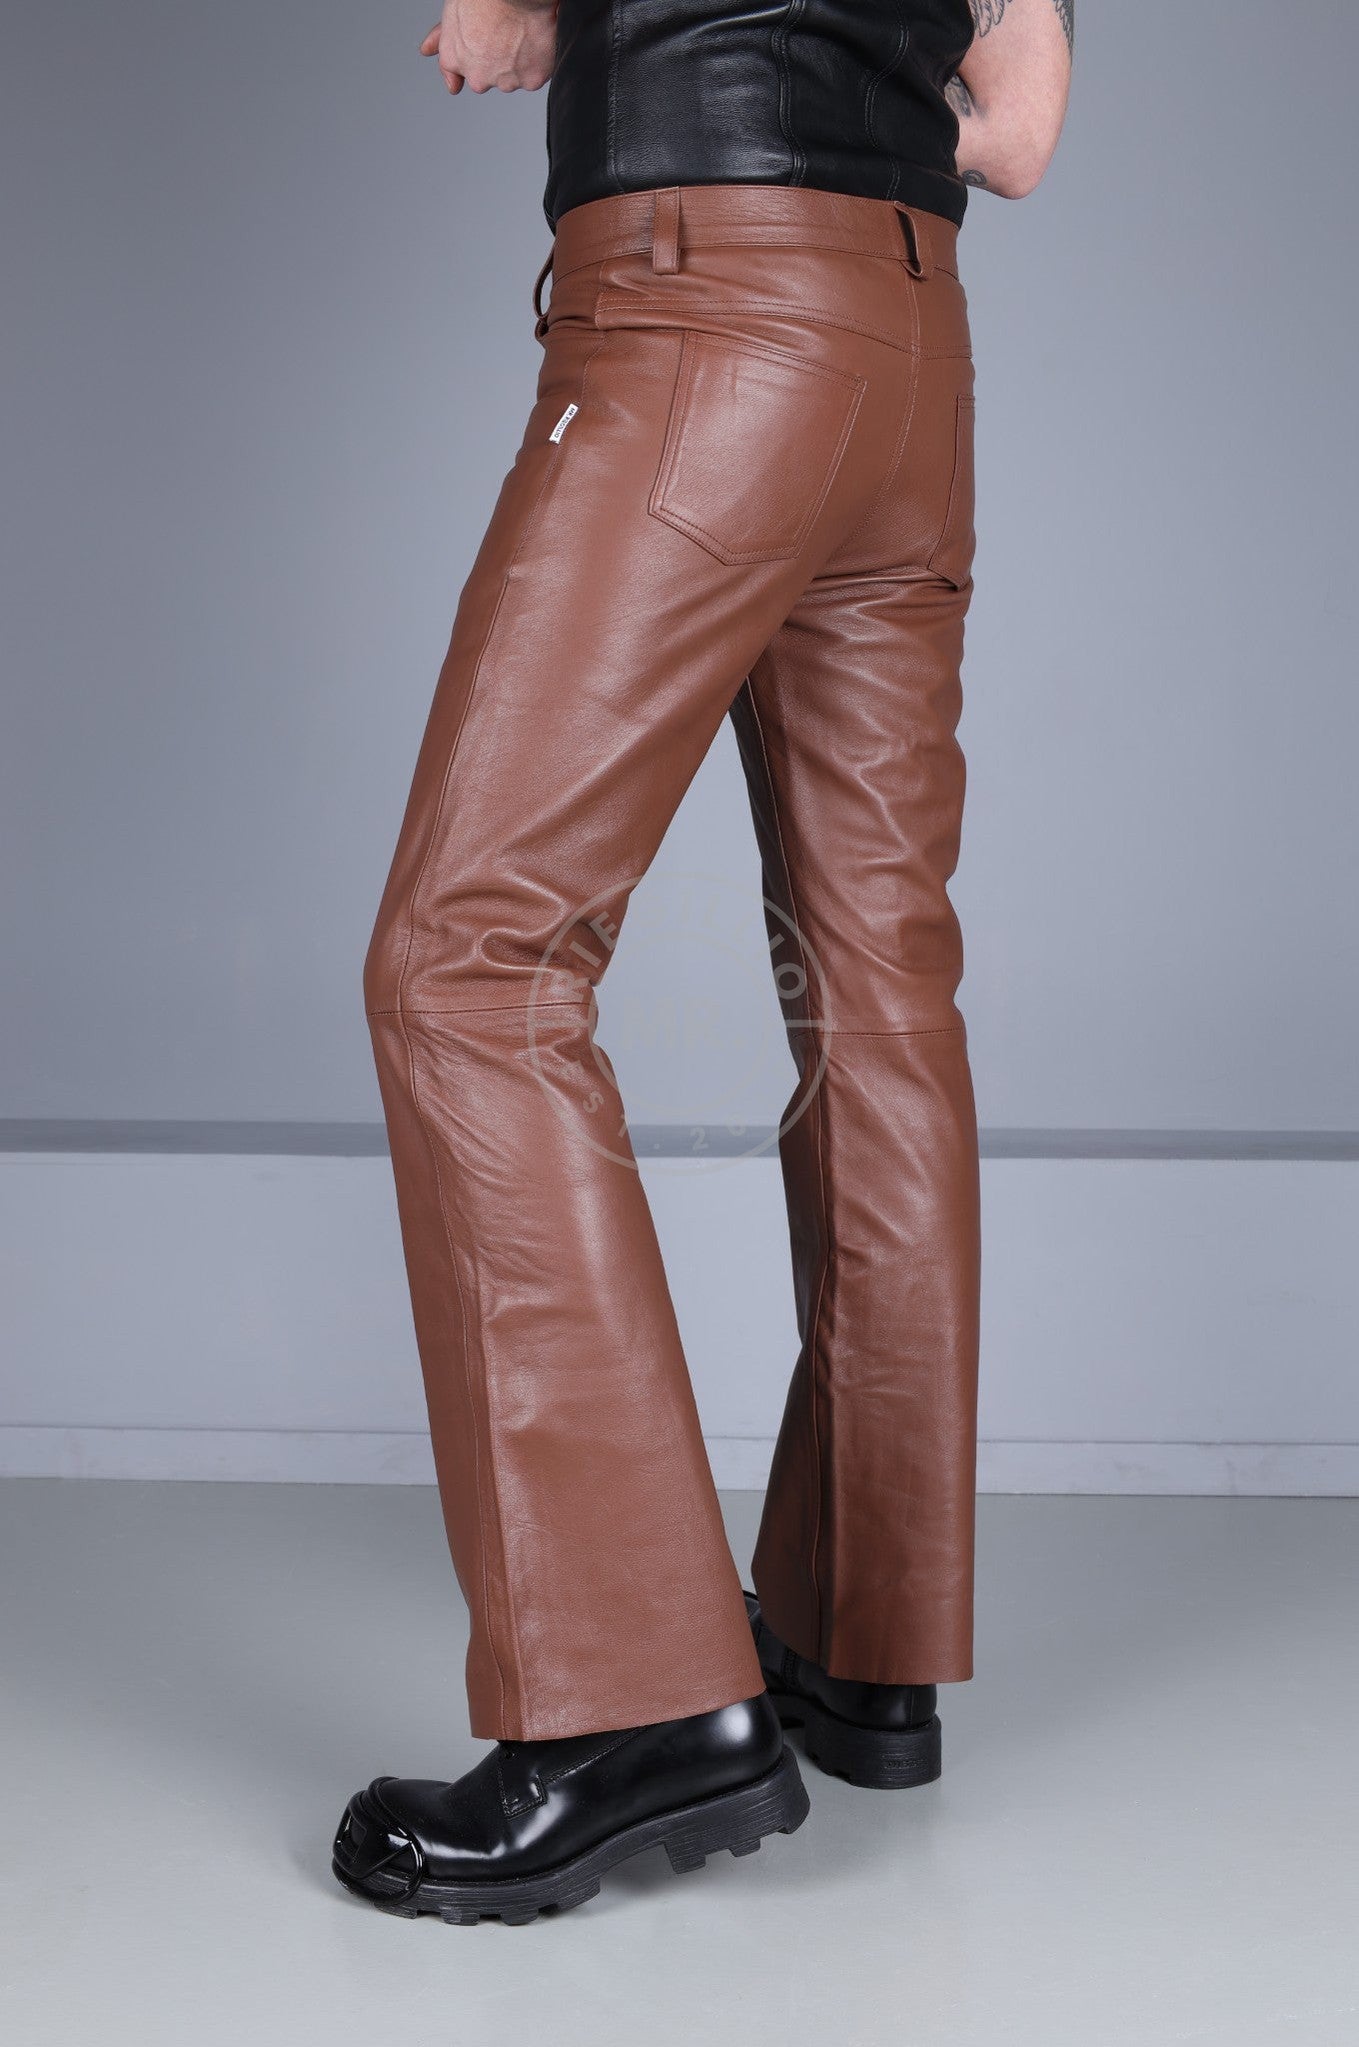 Cinnamon Brown Leather Bootcut Pants at MR. Riegillio